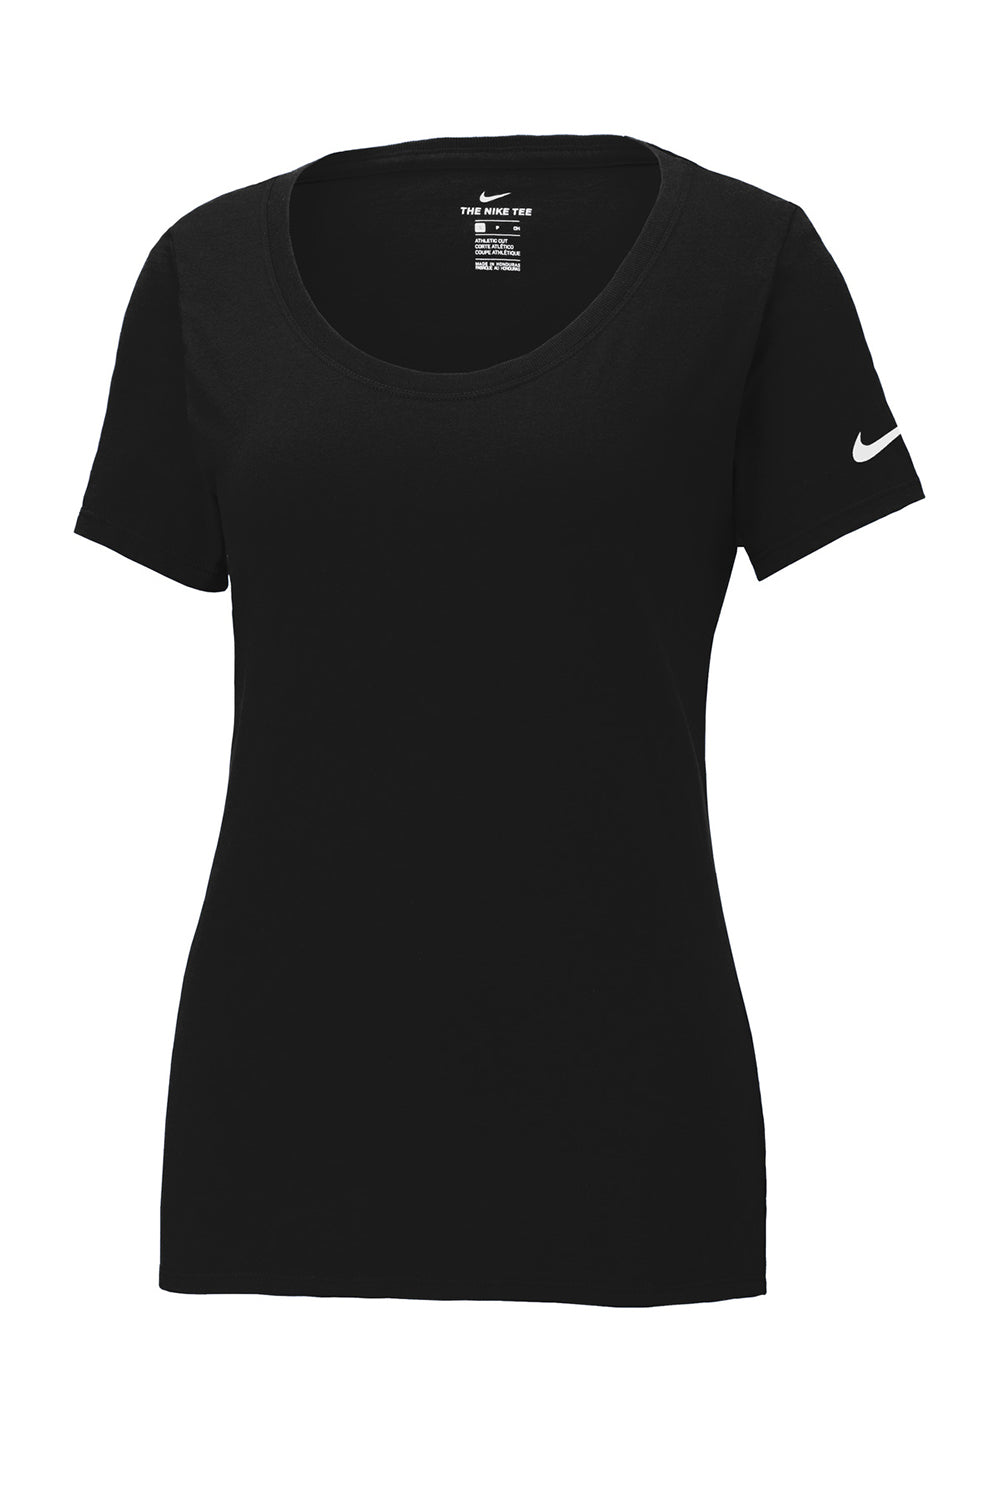 Nike NKBQ5234 Womens Dri-Fit Moisture Wicking Short Sleeve Scoop Neck T-Shirt Black Flat Front